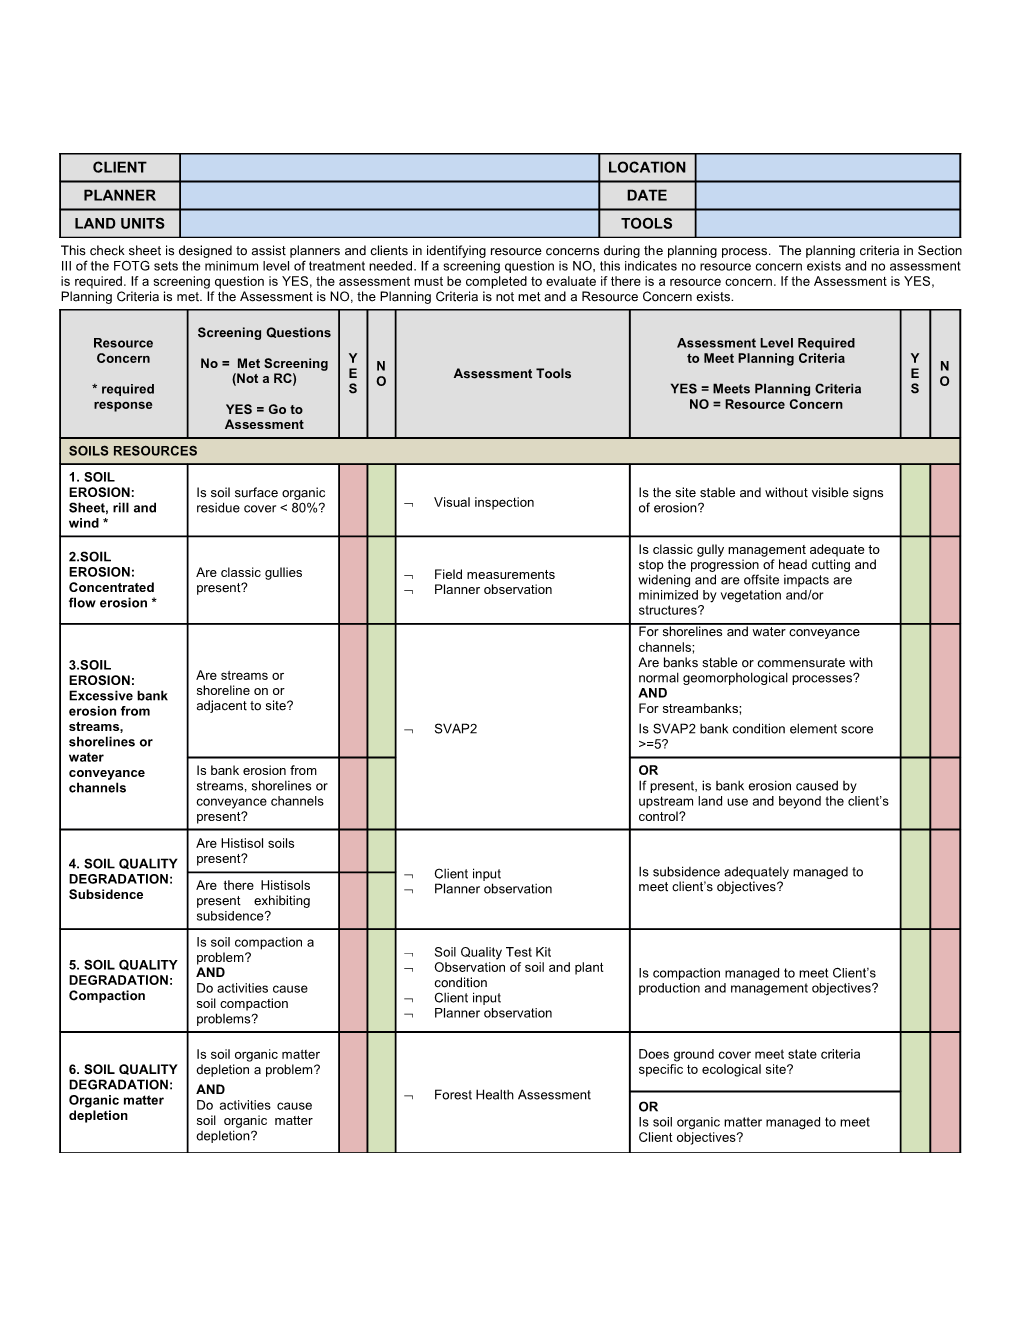 Checklist of Resource Concerns